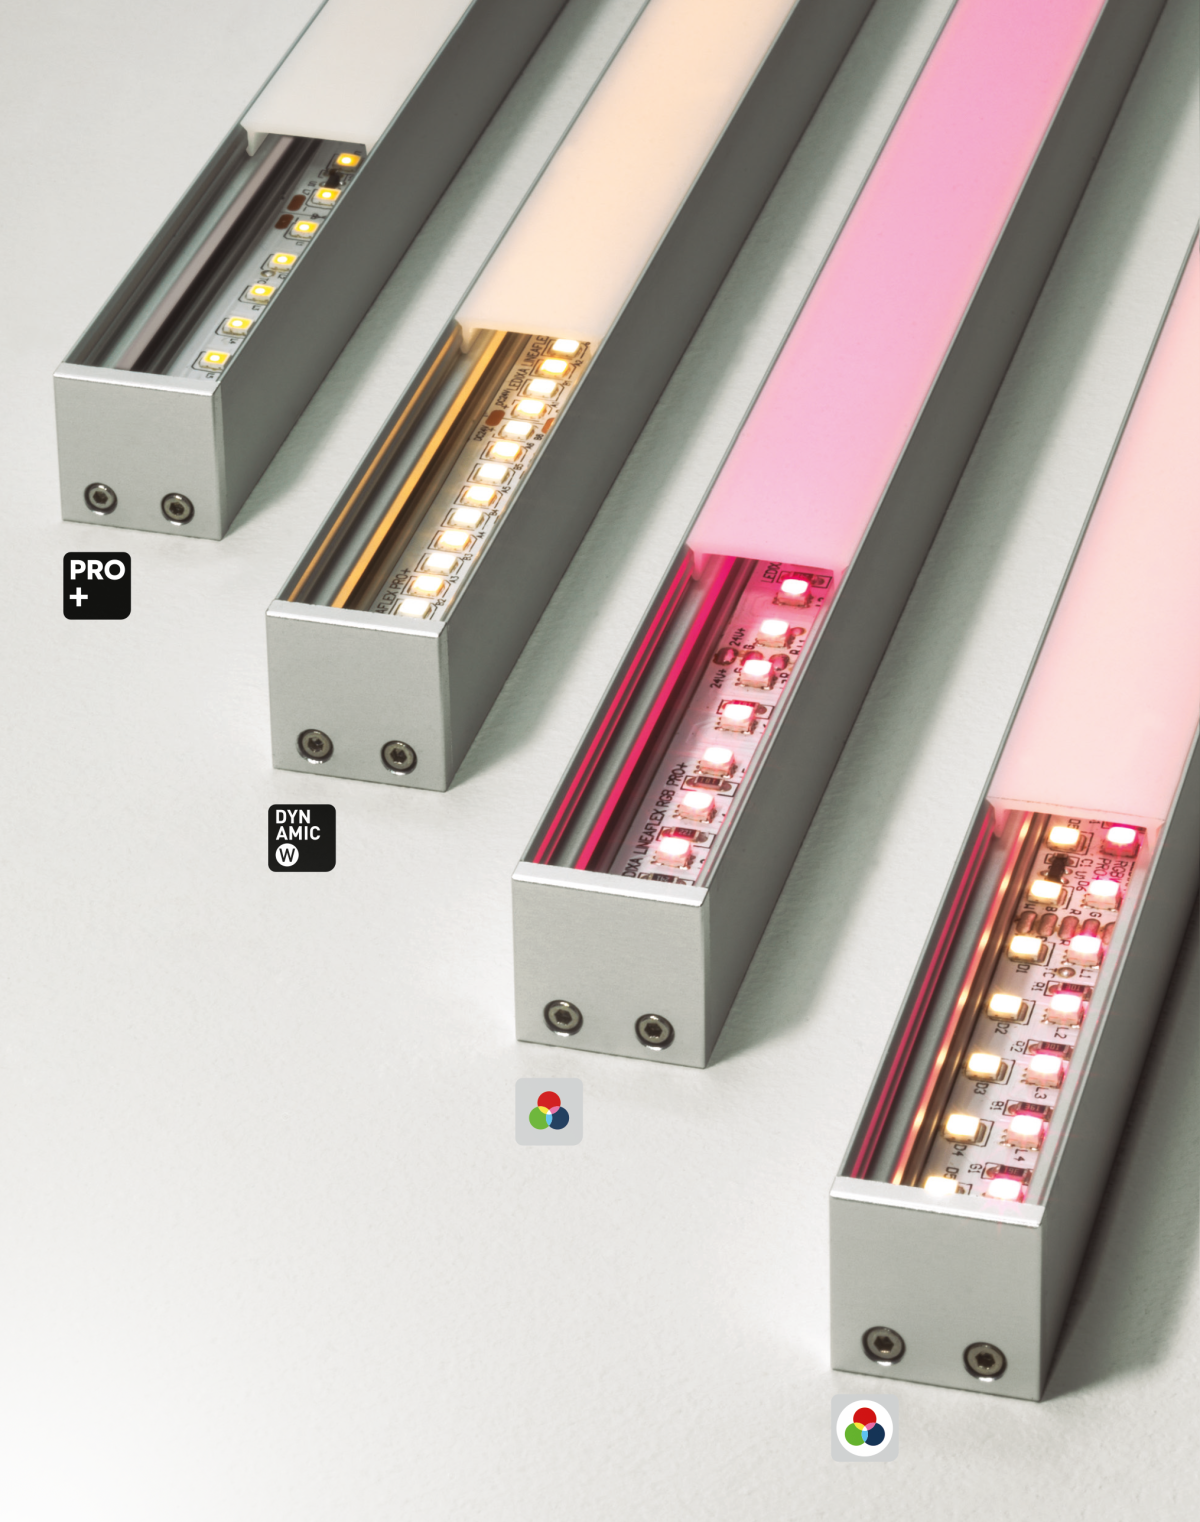 Ledixa lineaflex 4 colour temperature types (Pro plus, RGB, RGBWhite, Dynamic)